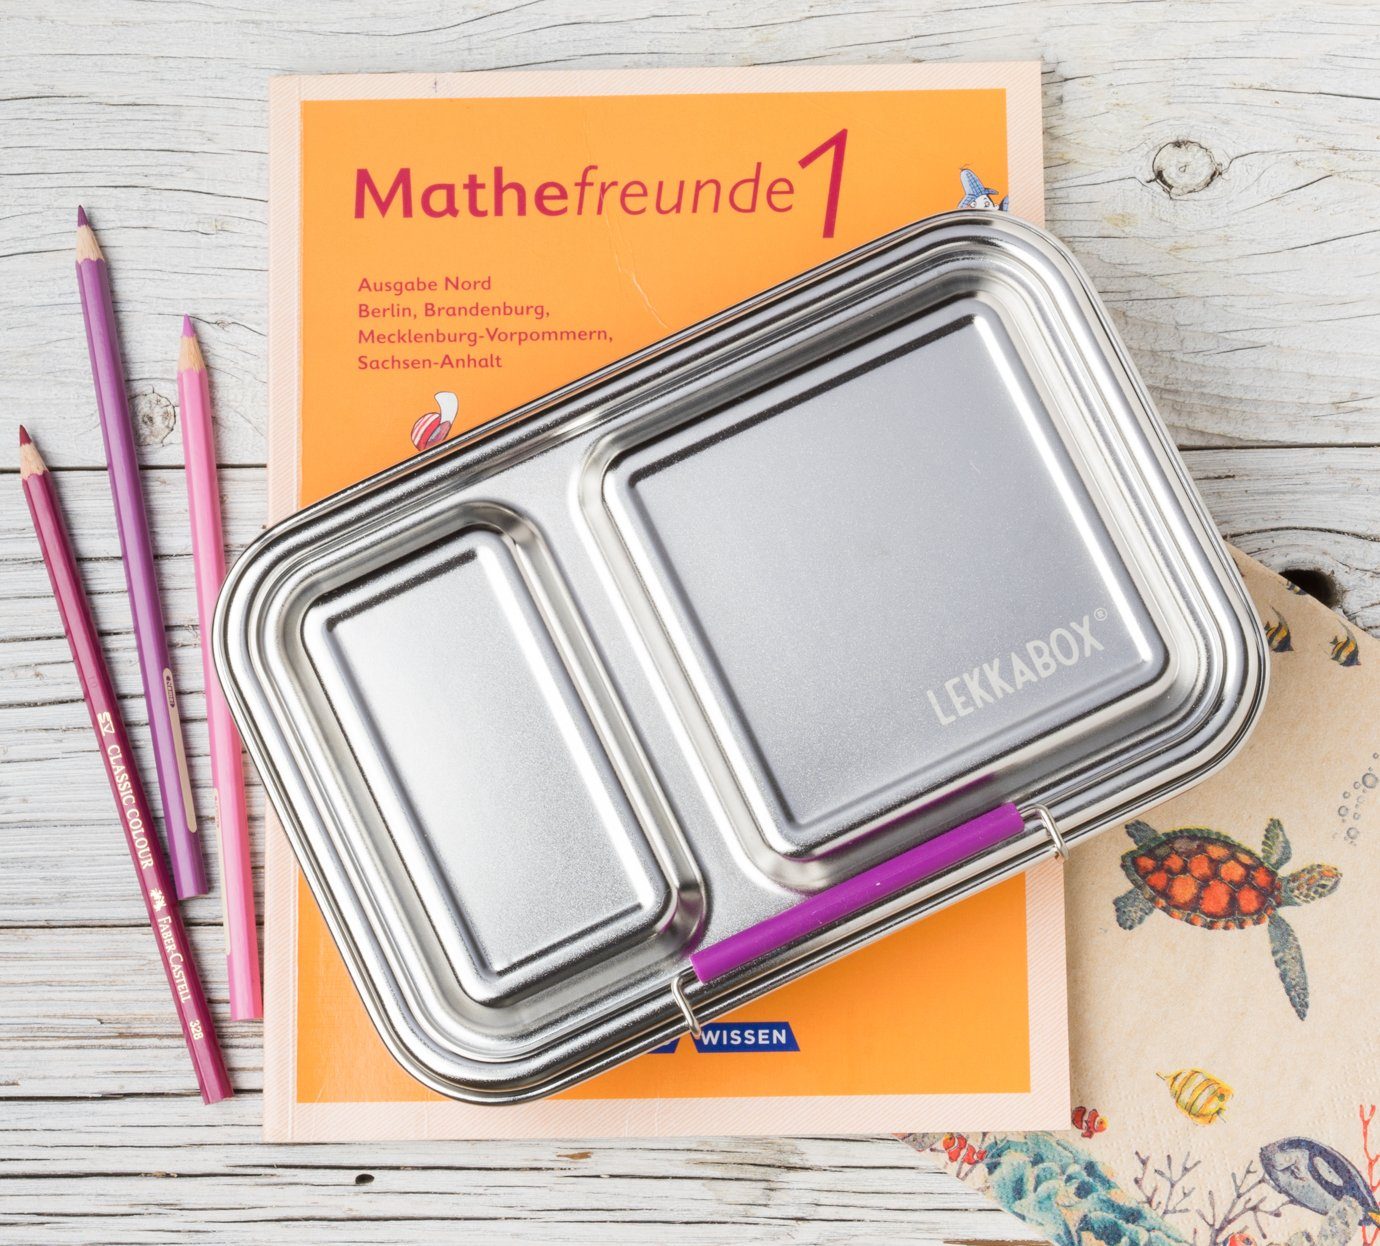 2 Brotdose, Lunchbox Kinder Bento Edelstahl - Brotbox Box Fächer DUO LEKKABOX